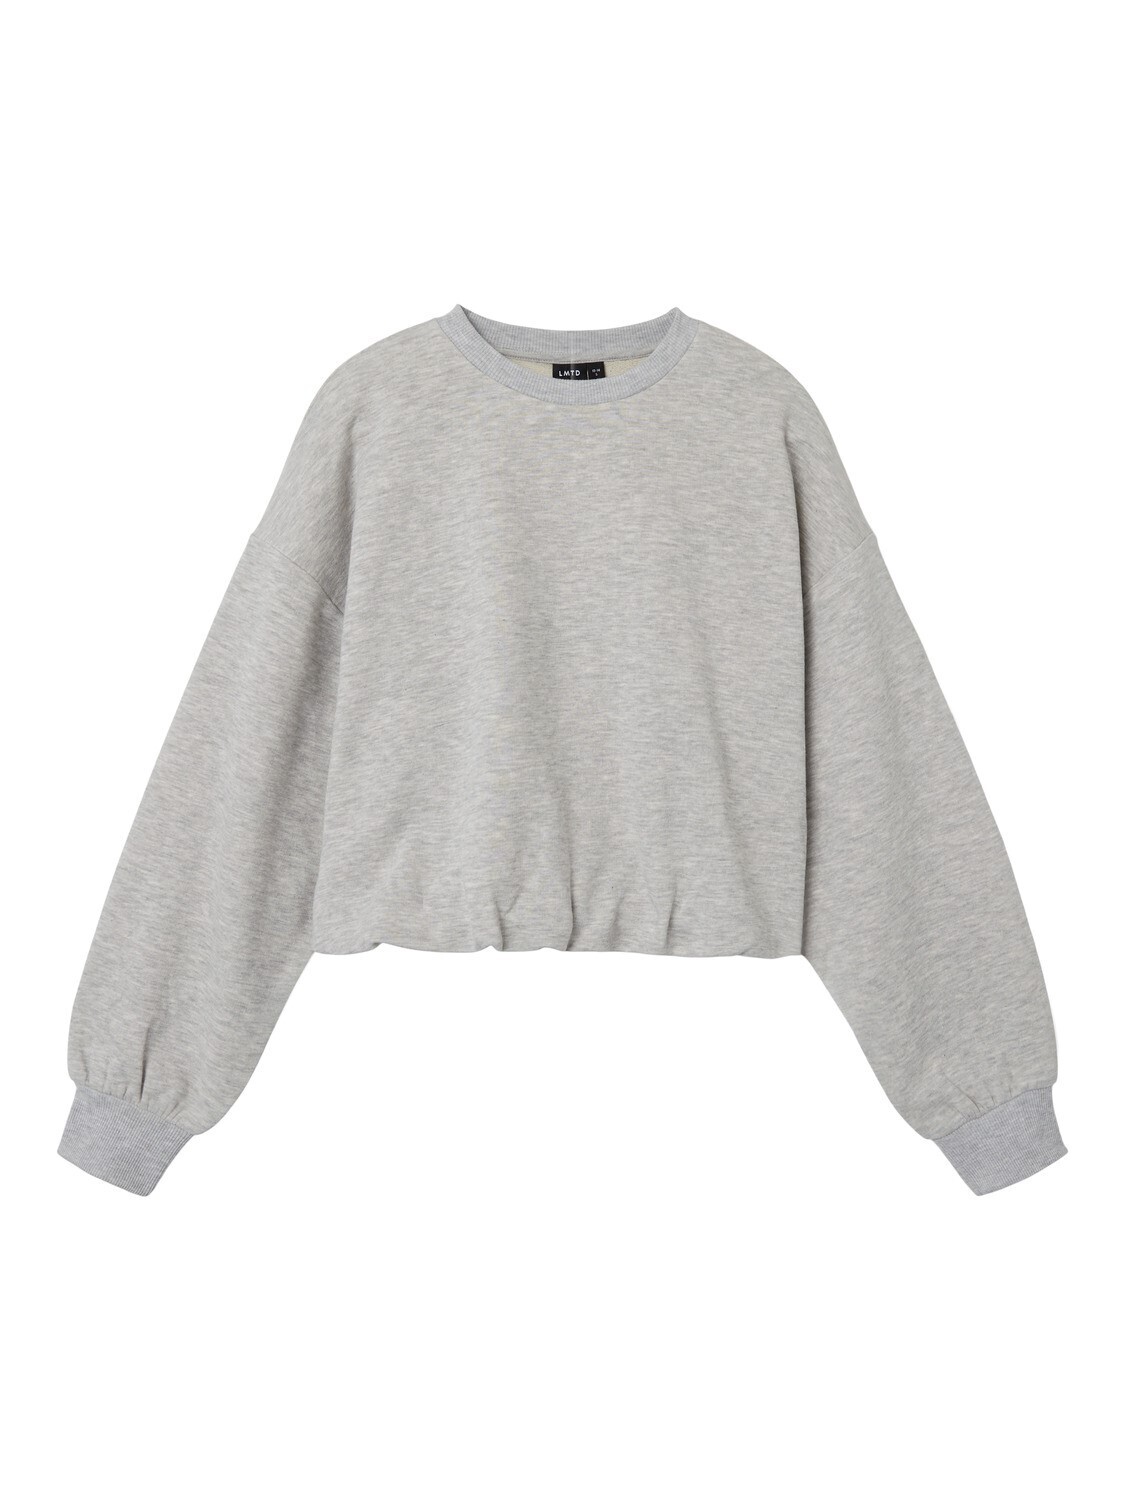 KIDS cropped sweater - HOPAL - light grey